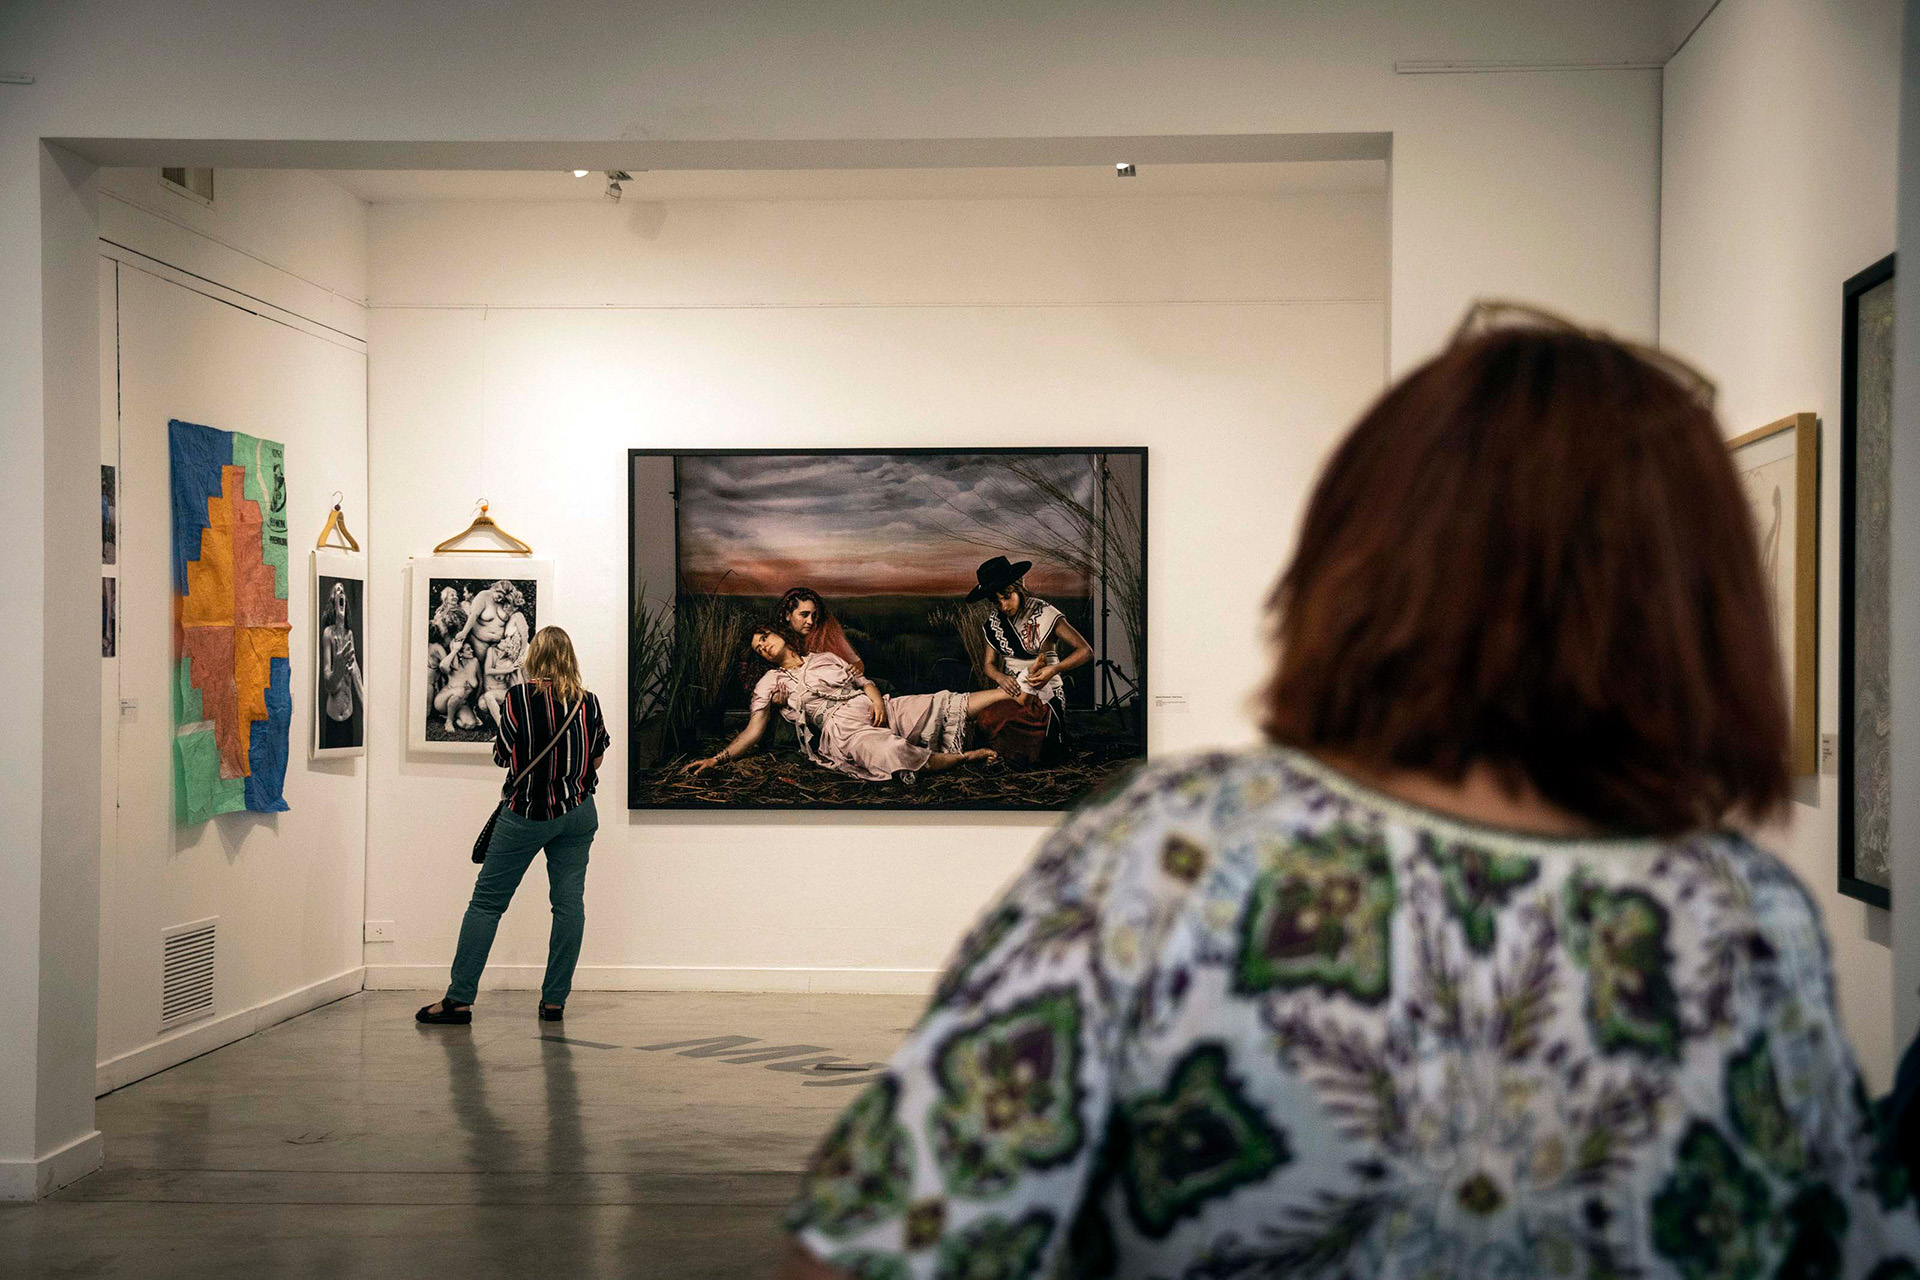 La fotografía "La cautiva", de Mariana Pierantoni y Paula Perise, se observa al fondo de la sala del FNA (Foto: Télam S. E.)